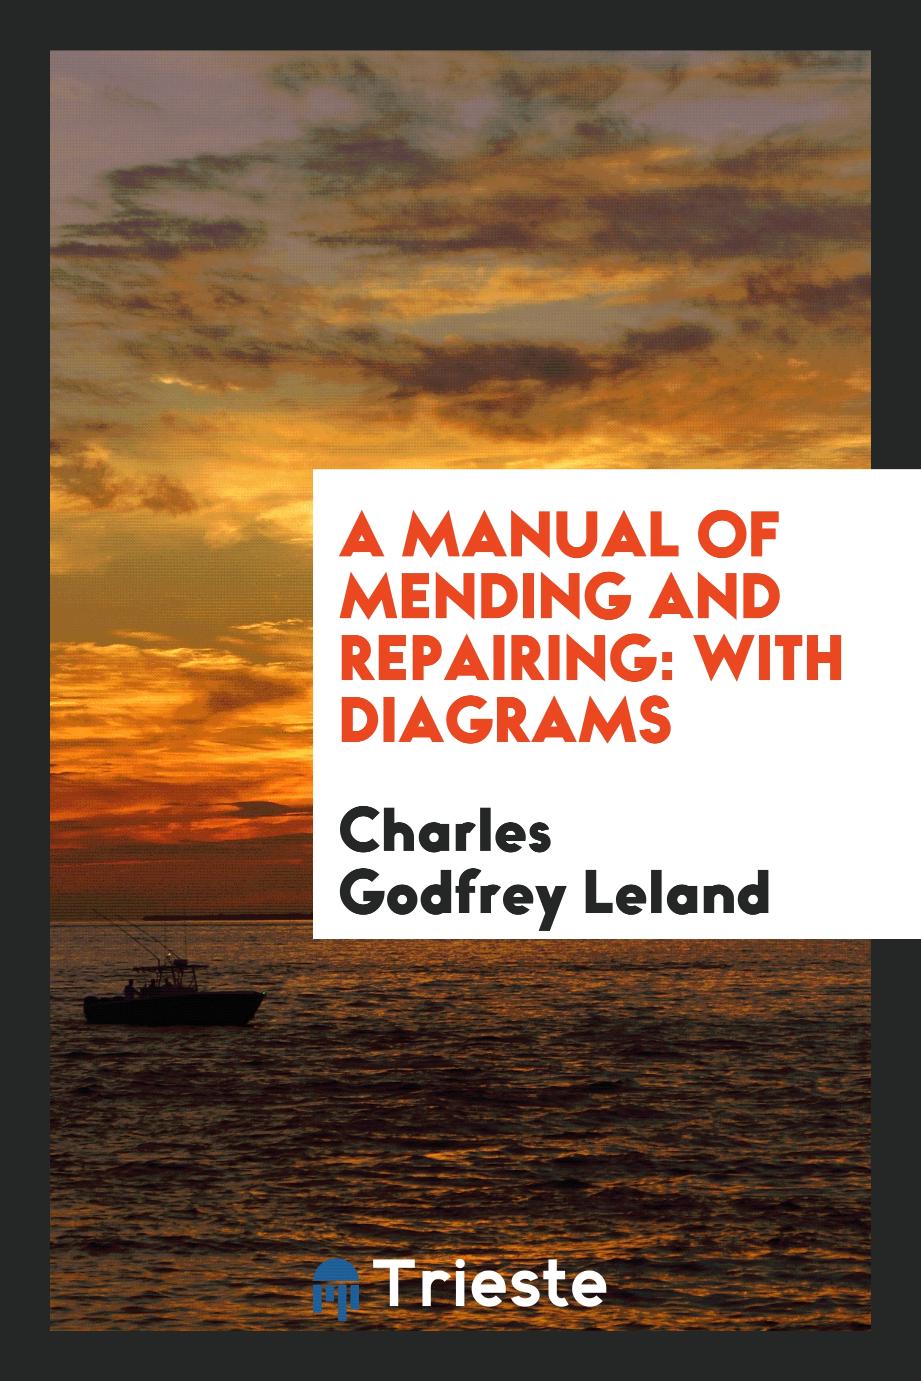 A Manual of Mending and Repairing: With Diagrams